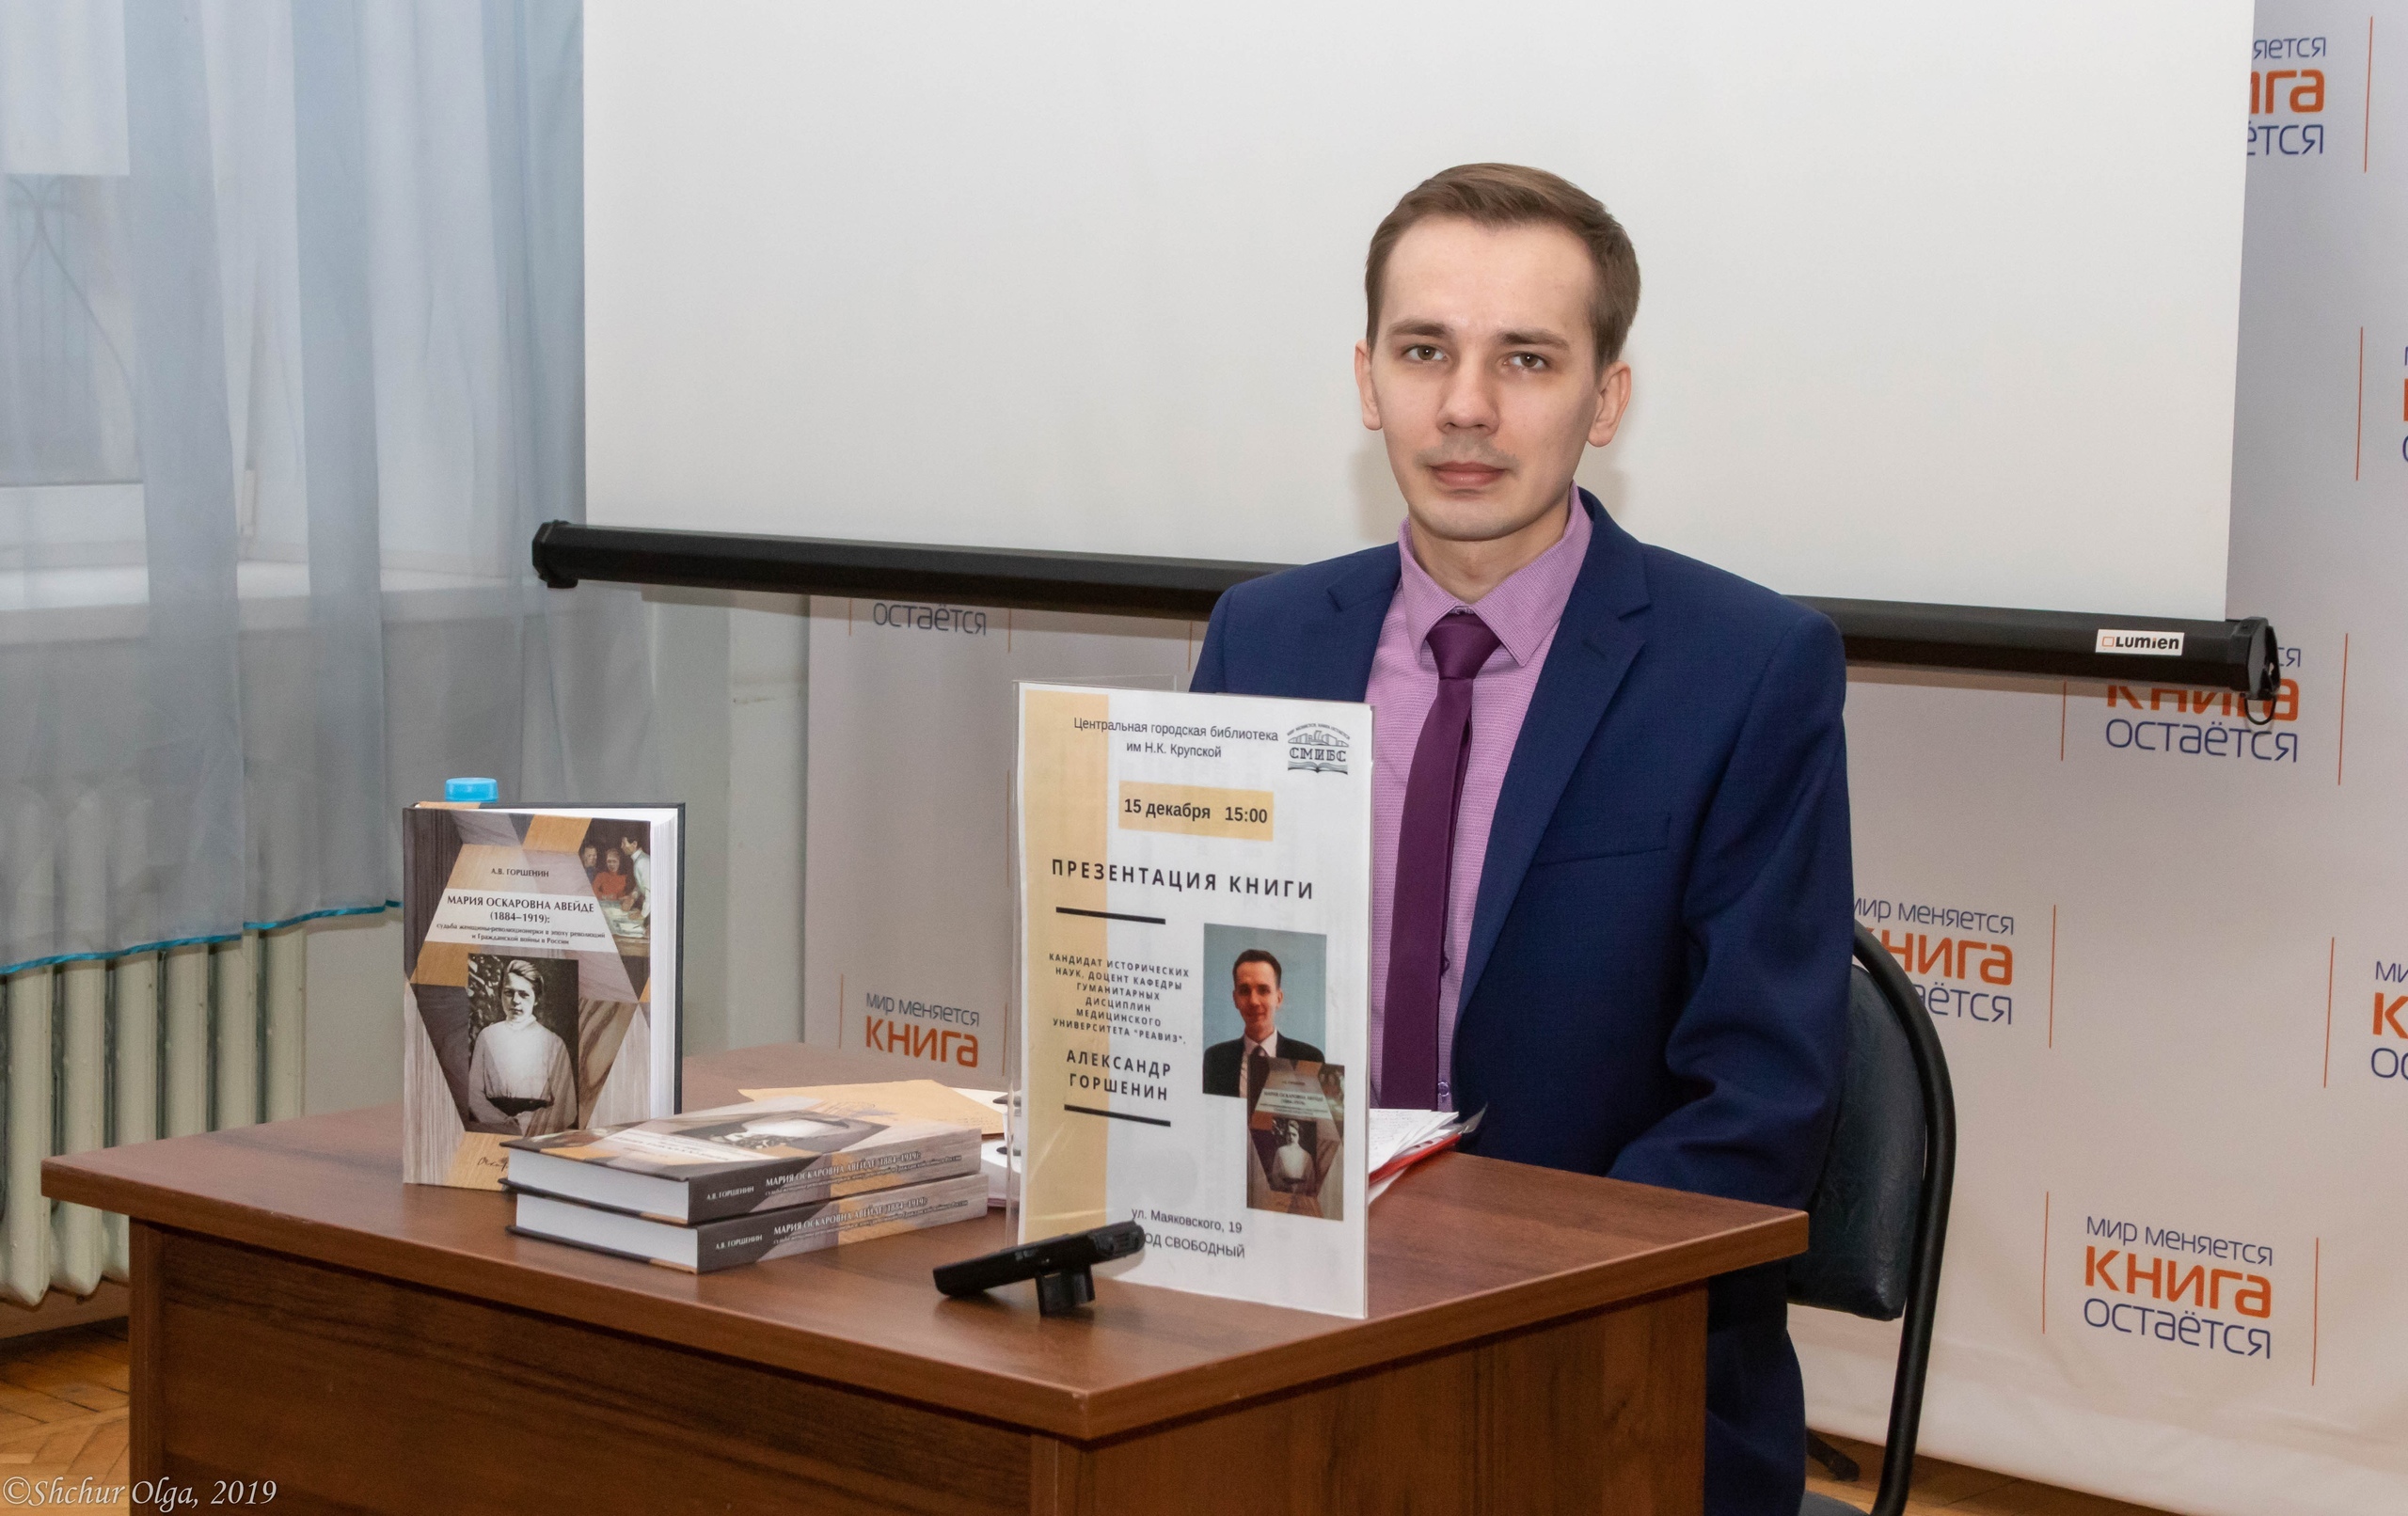 Историк Александр Горшенин: Мое хобби - научные изыскания